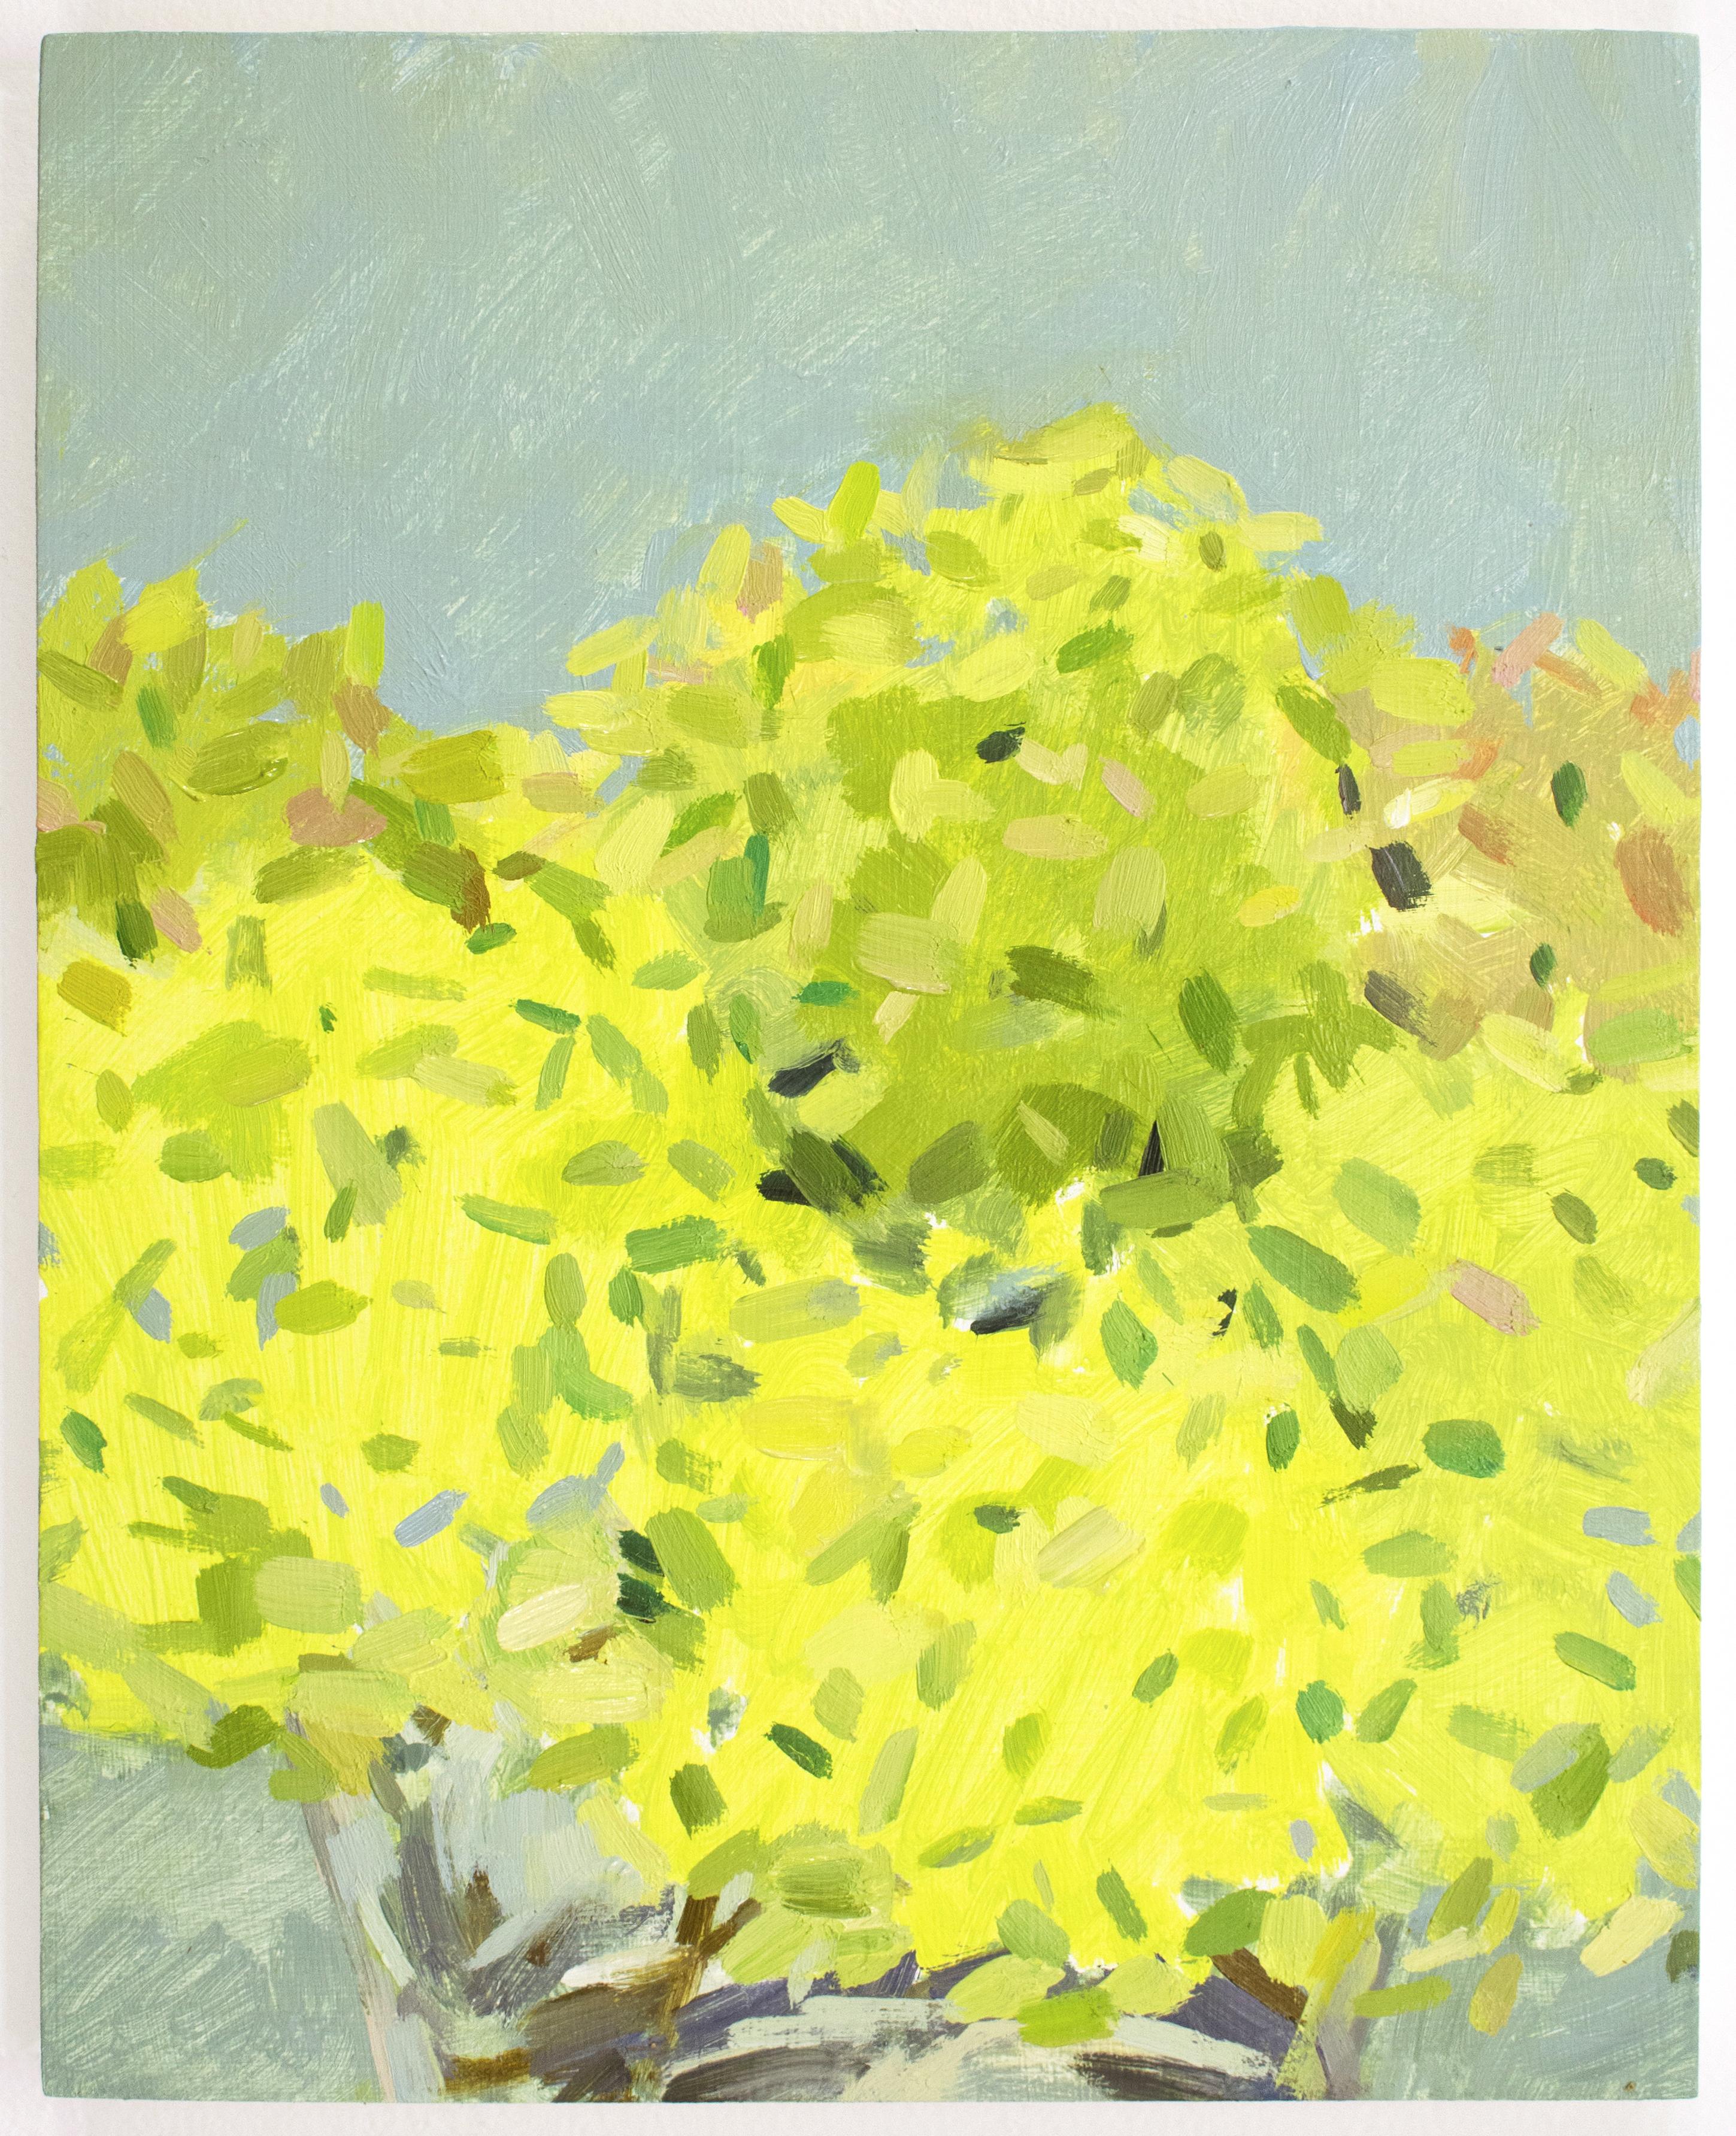 'Green Hydrangeas' - still life - floral, botanical, impressionism - Post-Impressionist Painting by Christina Renfer Vogel